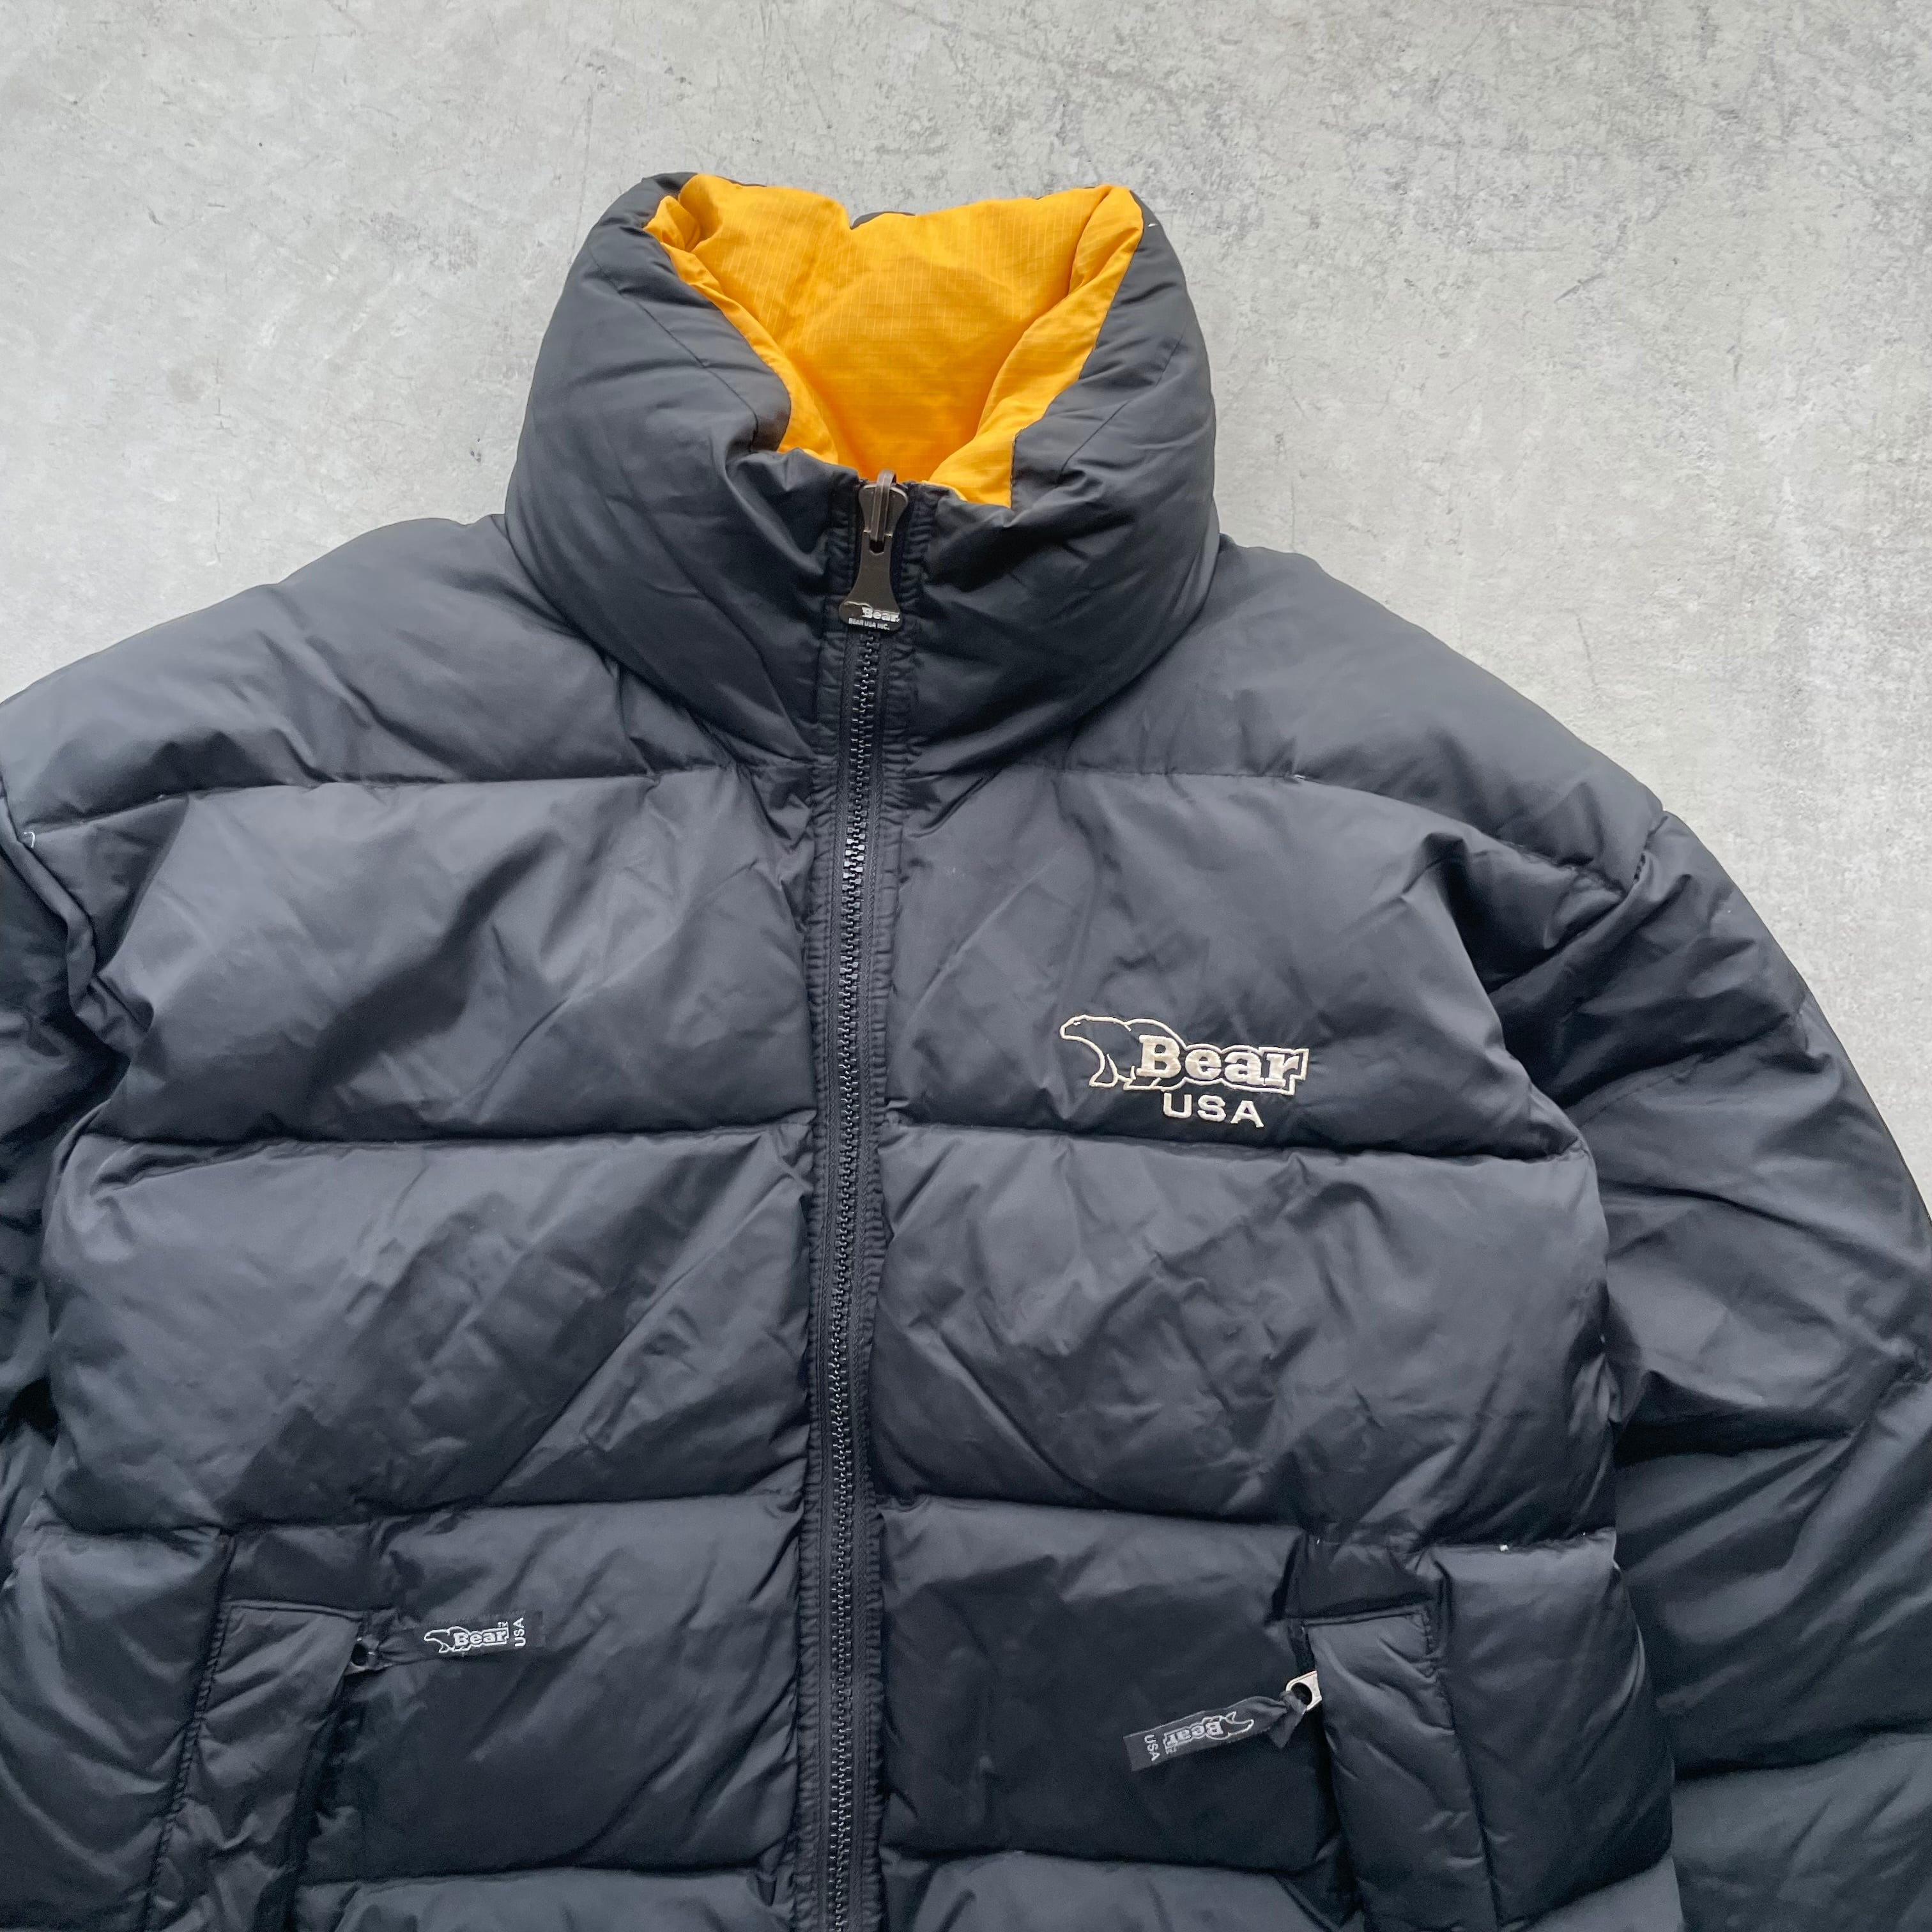 BEAR USA/90s reversible puff jacket | Seek the online